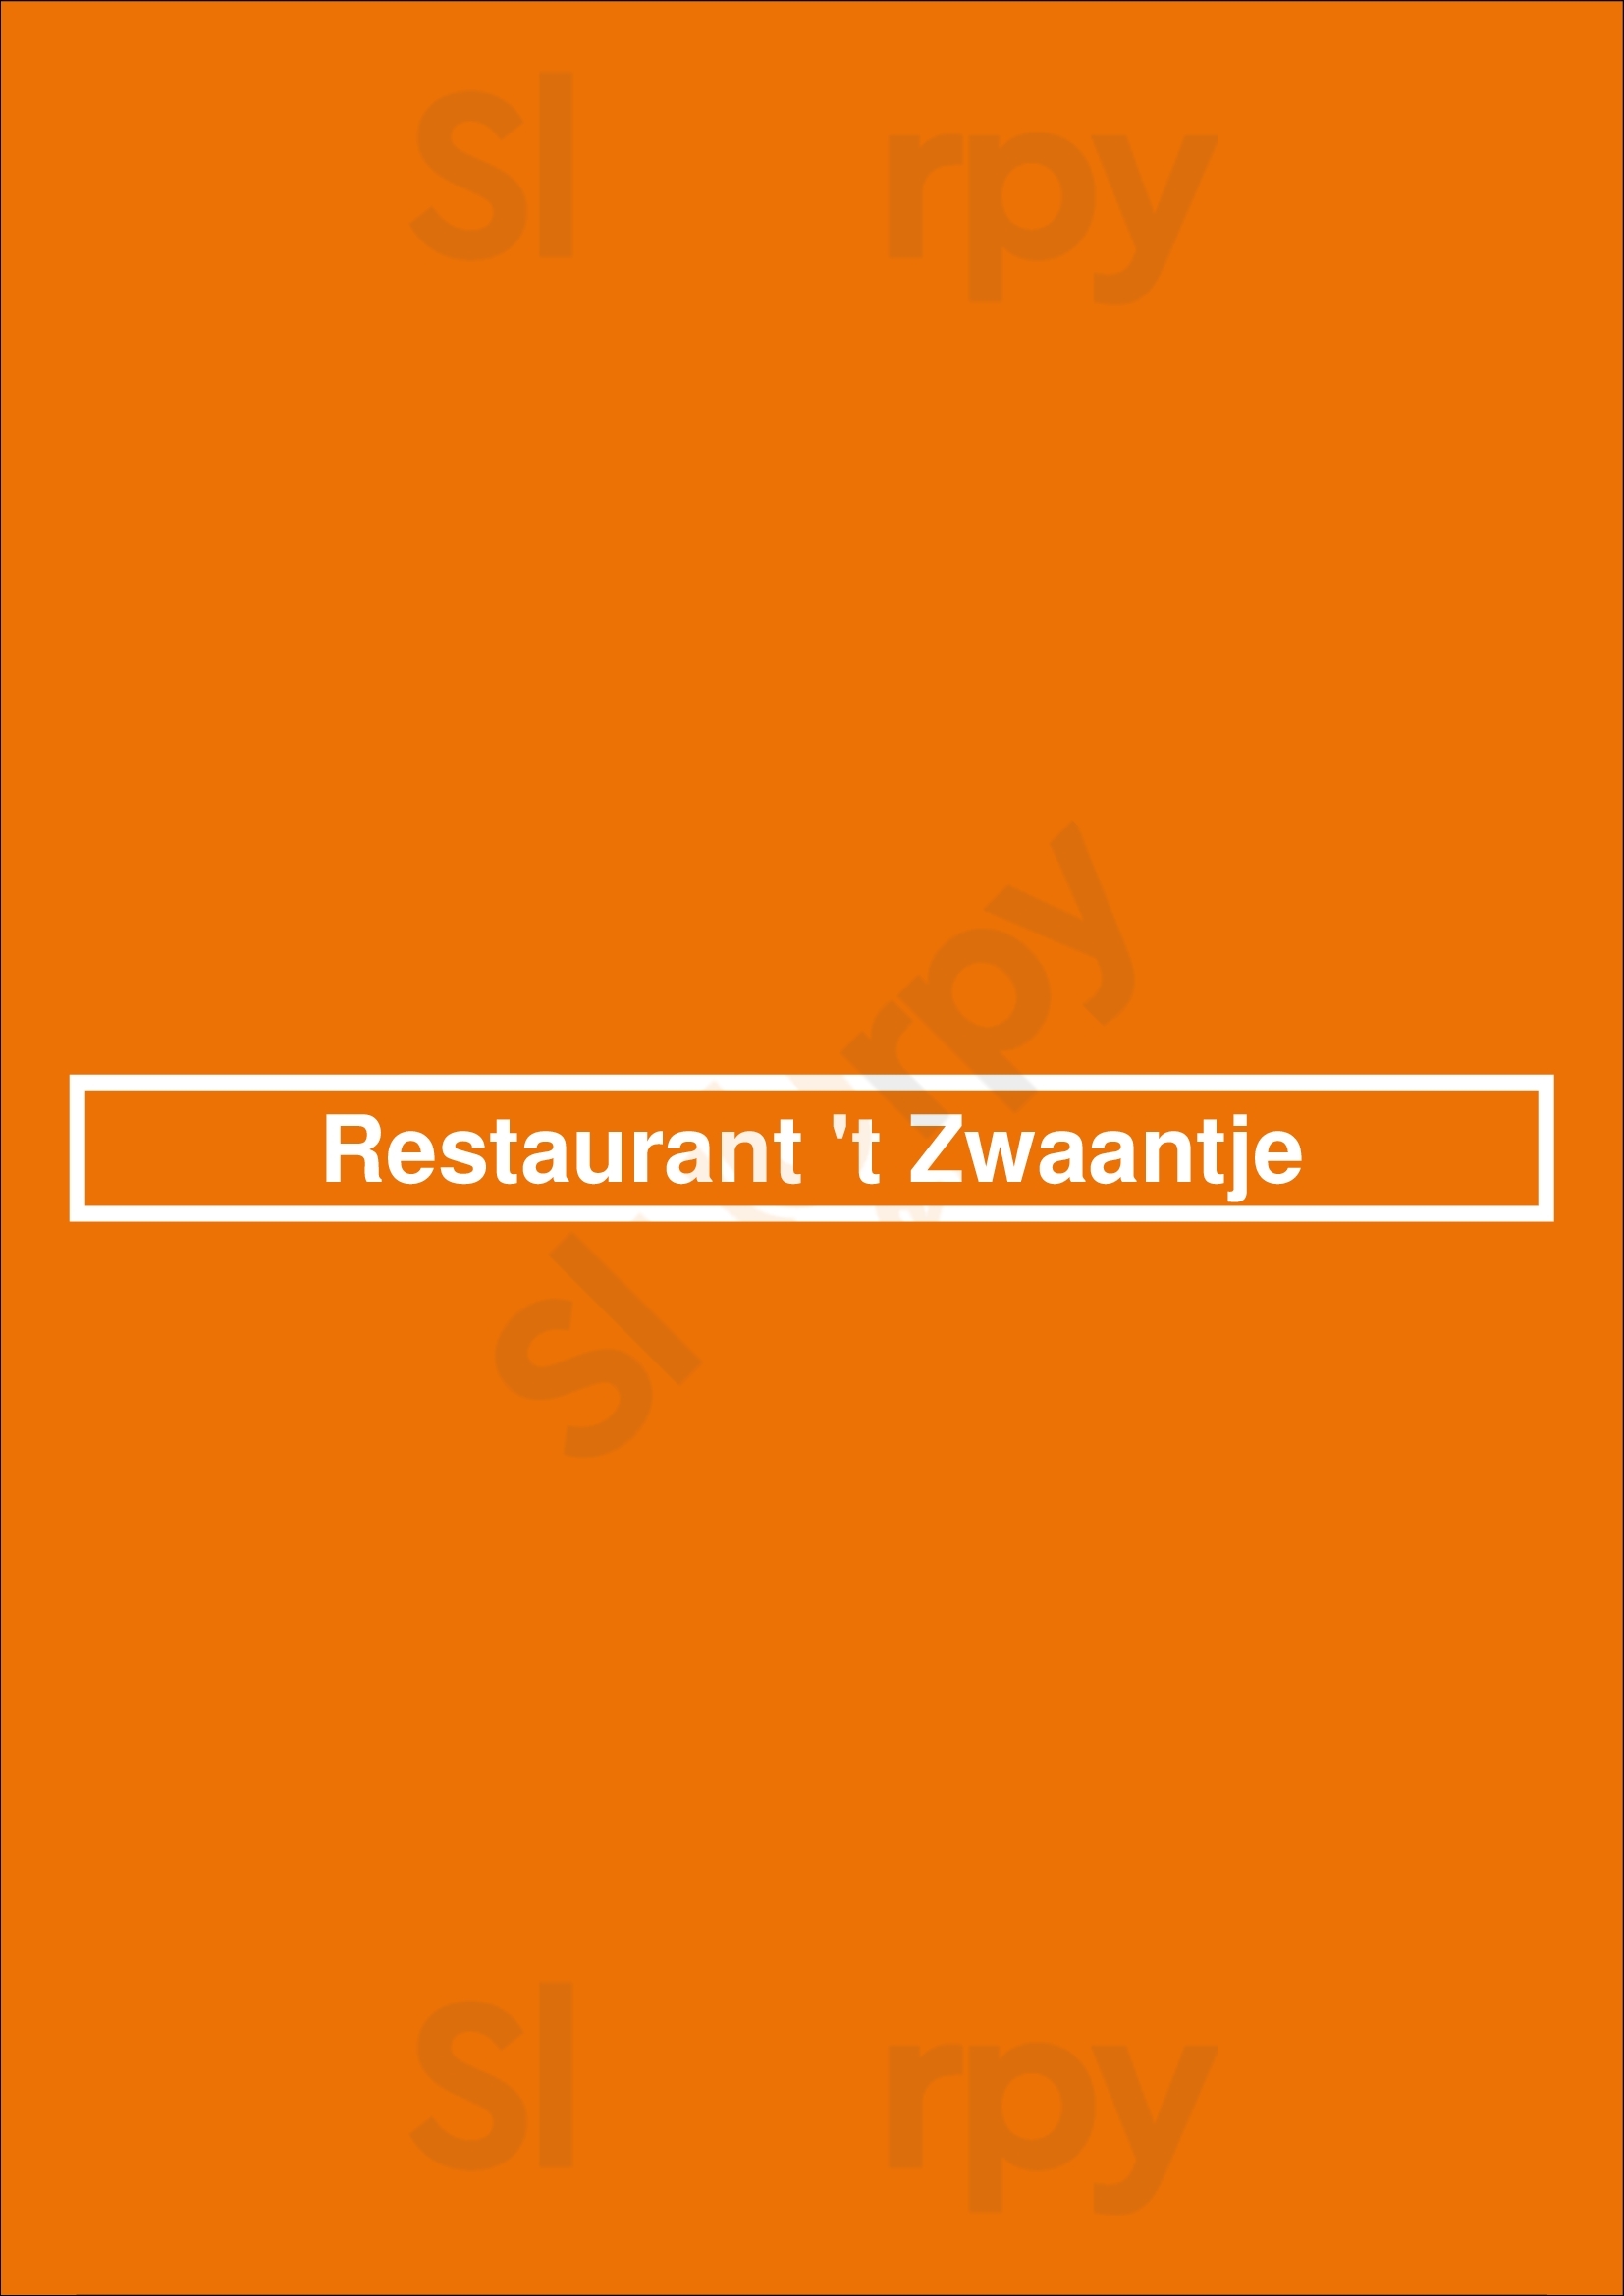 Restaurant 't Zwaantje Amsterdam Menu - 1